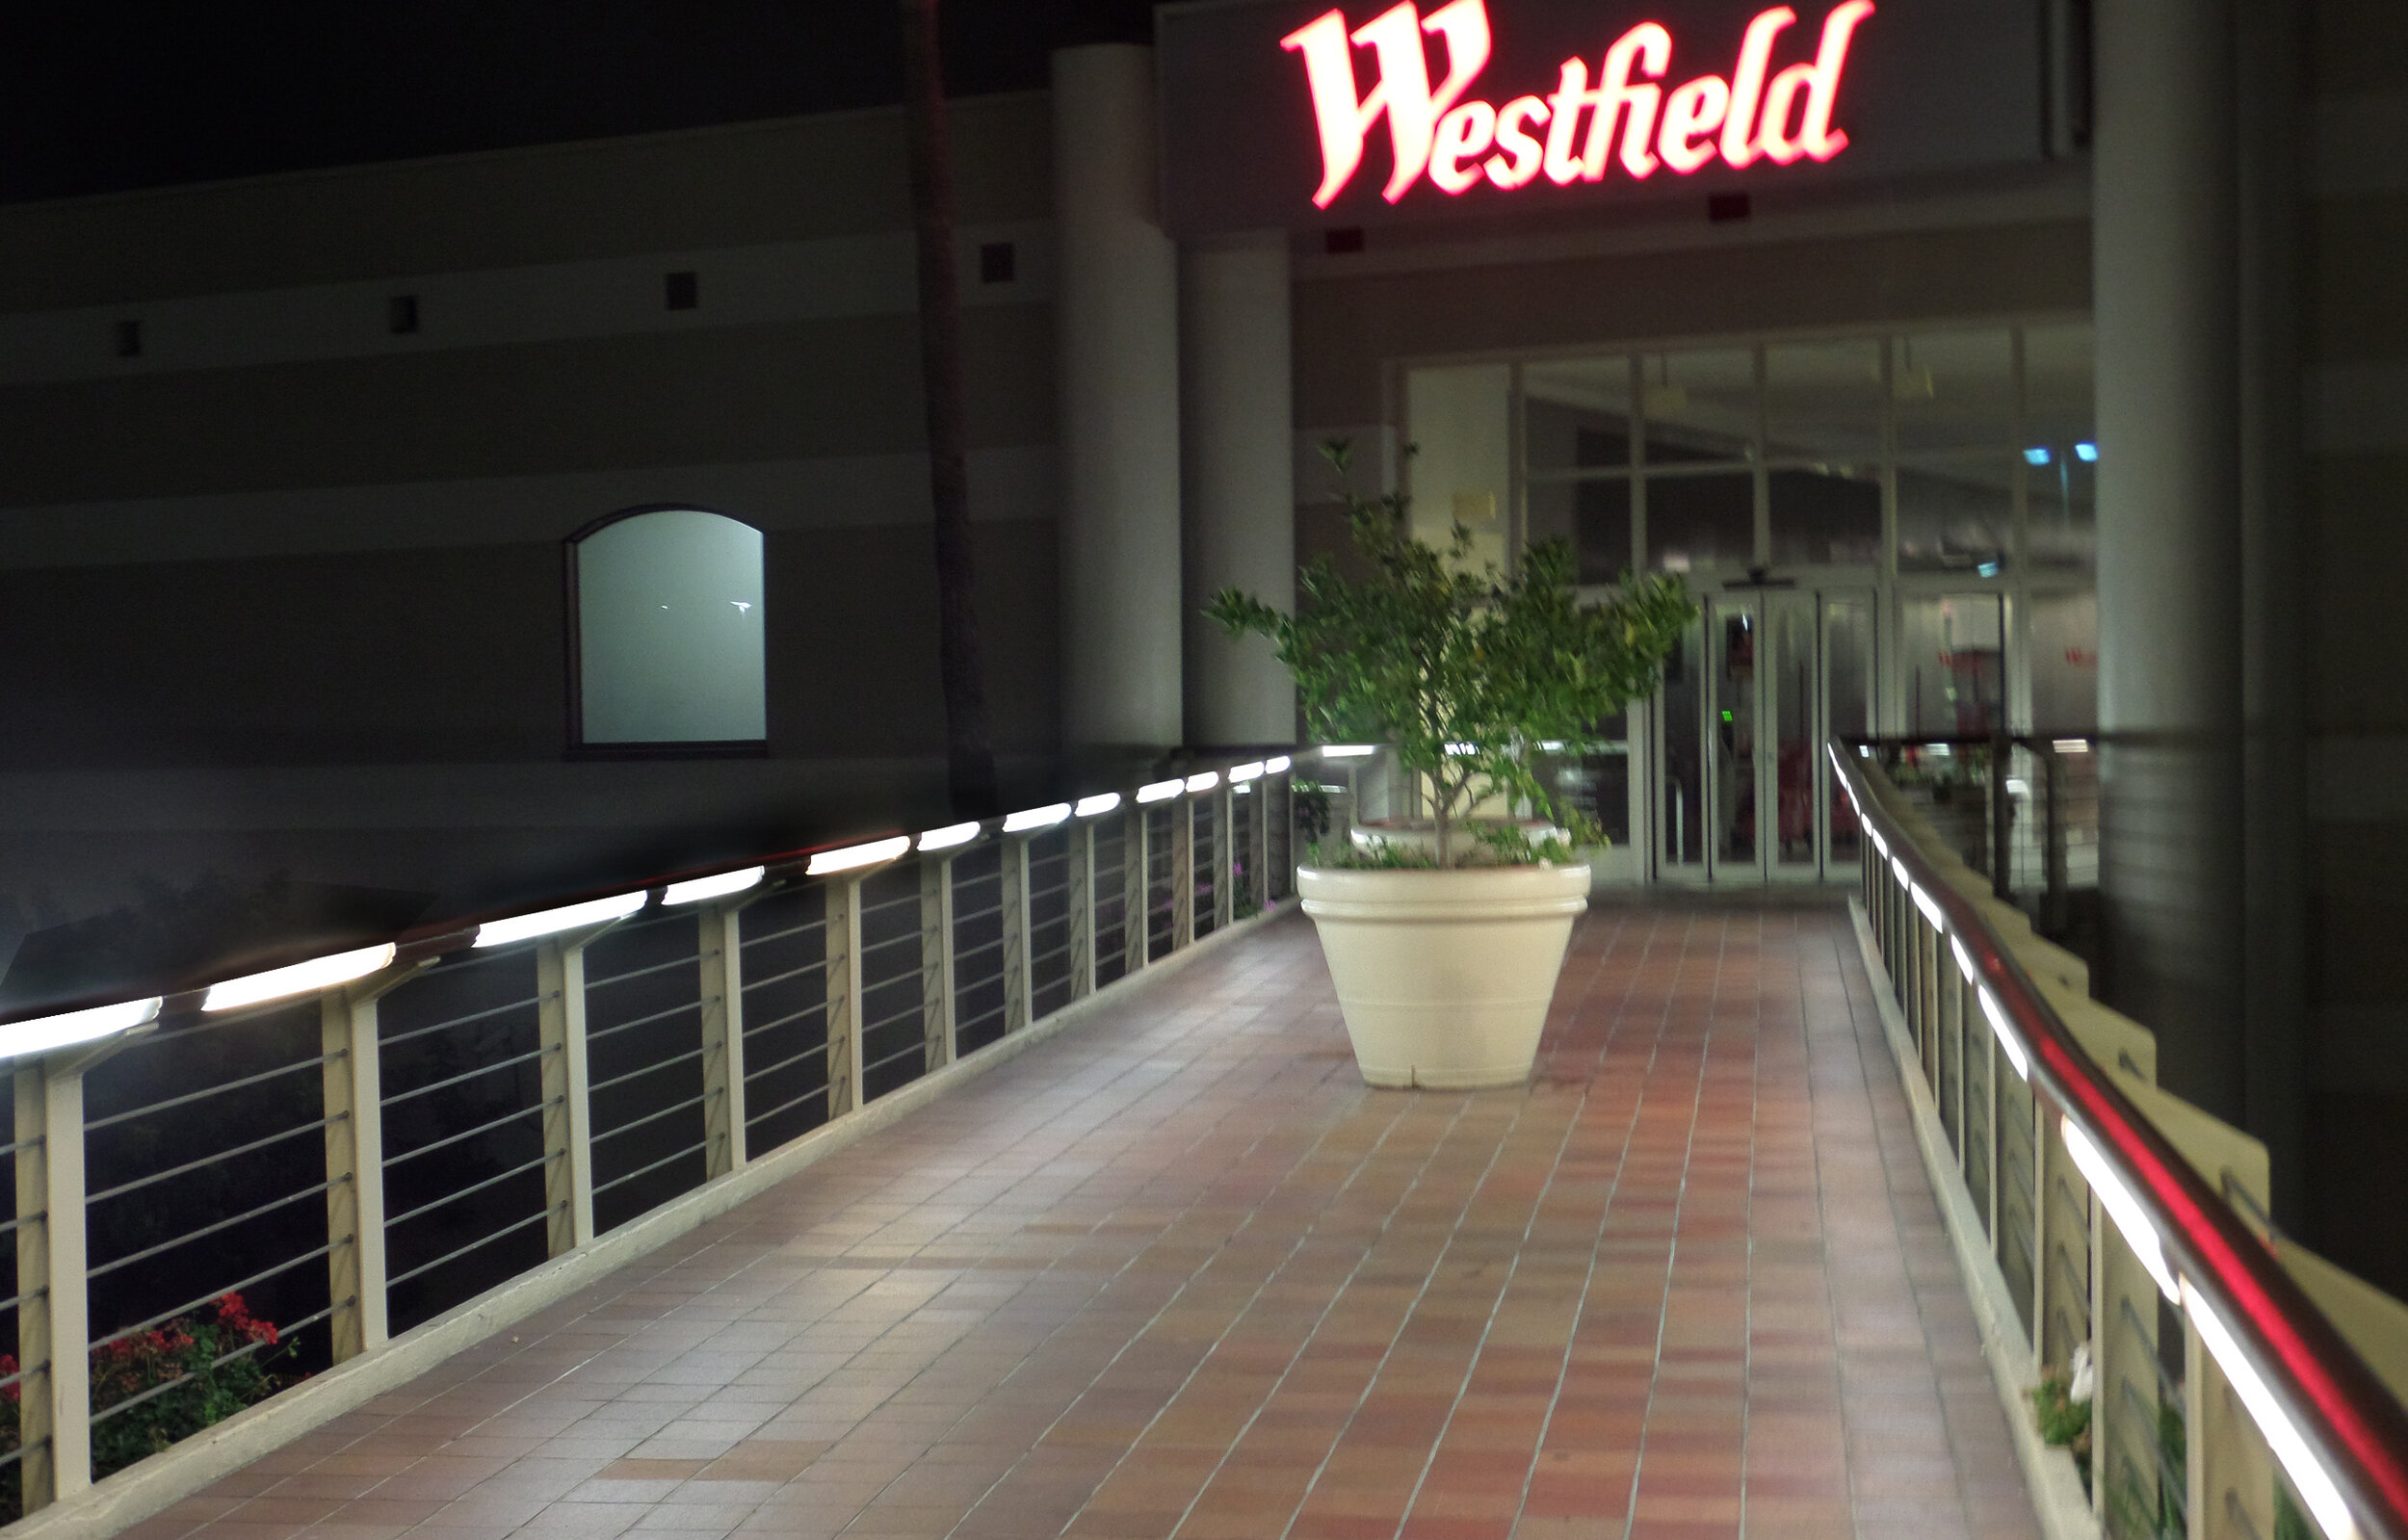  Westfield Mainplace Mall, Santa Ana, CA - LR3 